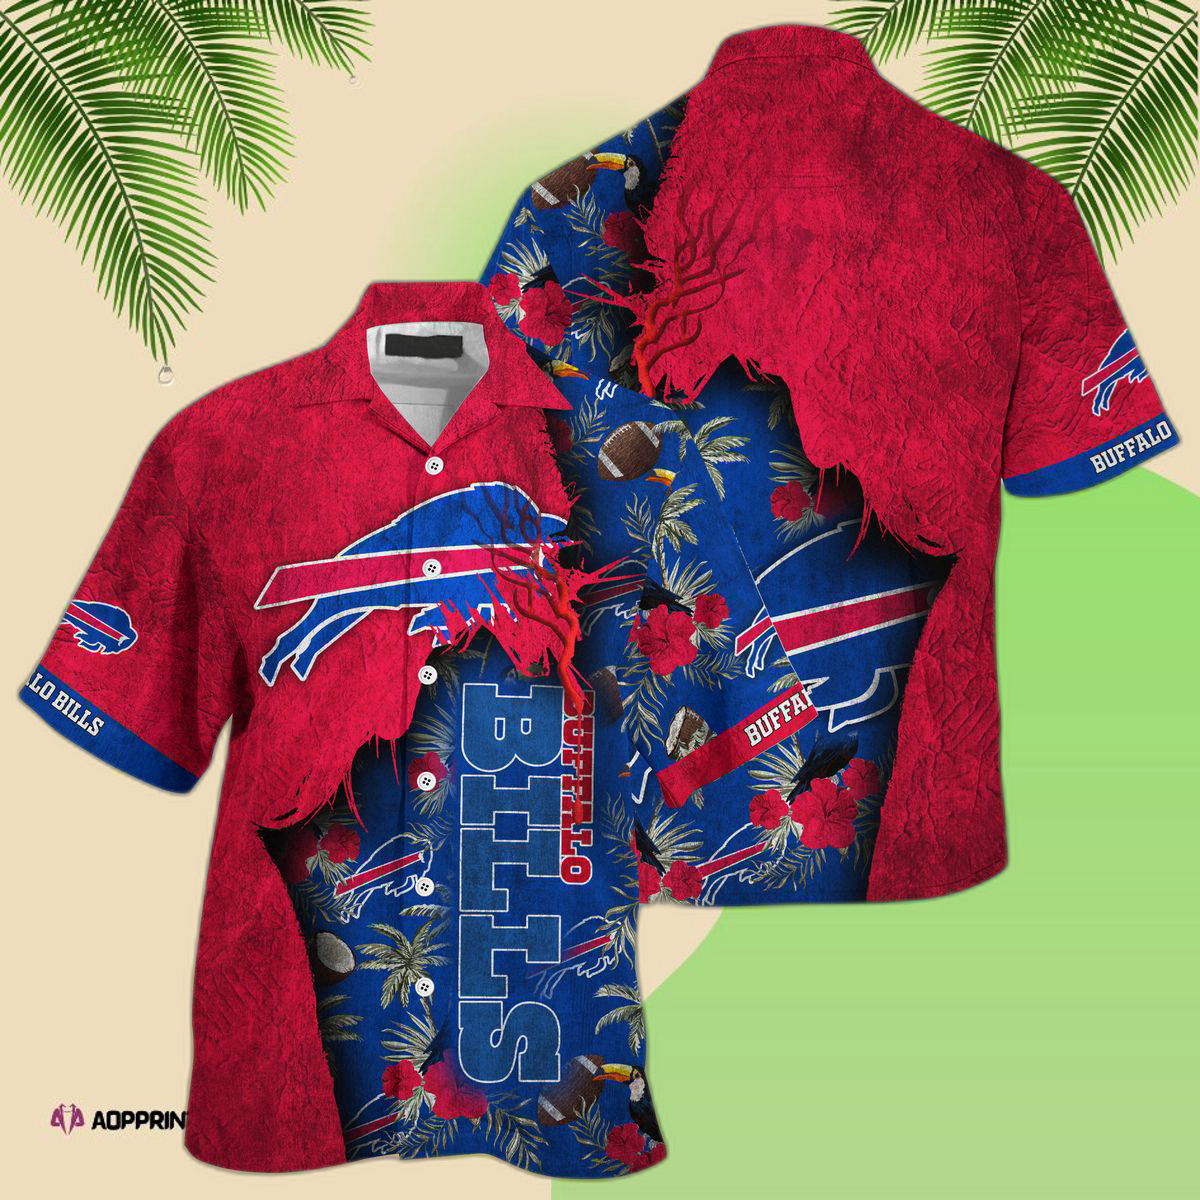 New Red Tropical Floral Buffalo Bills NFL Hawaiian Shirt Travel Summer Gift